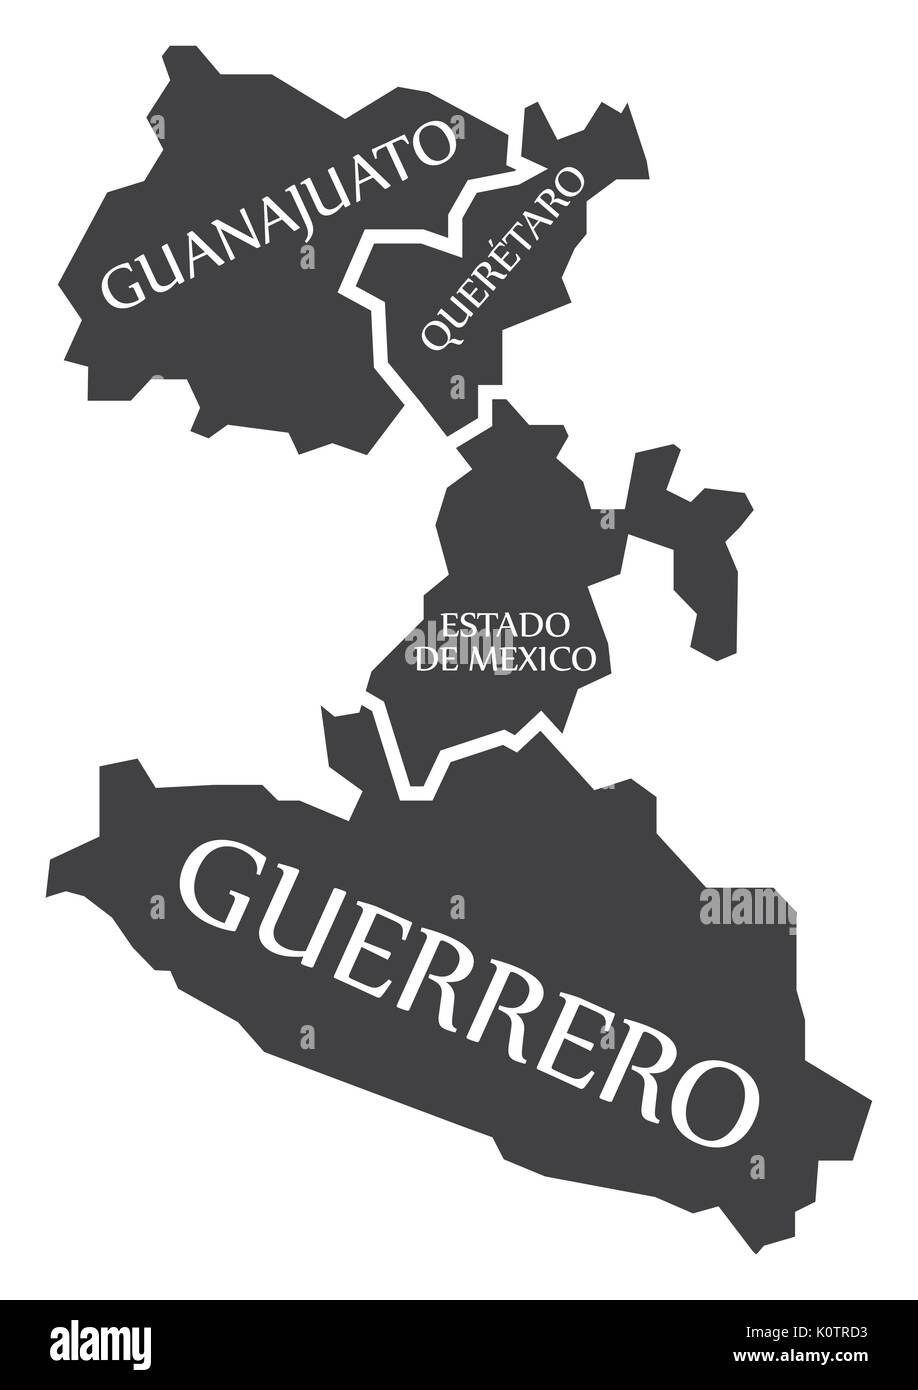 Guanajuato - Queretaro - Estado de Mexico - Guerrero Map Mexico illustration Stock Vector